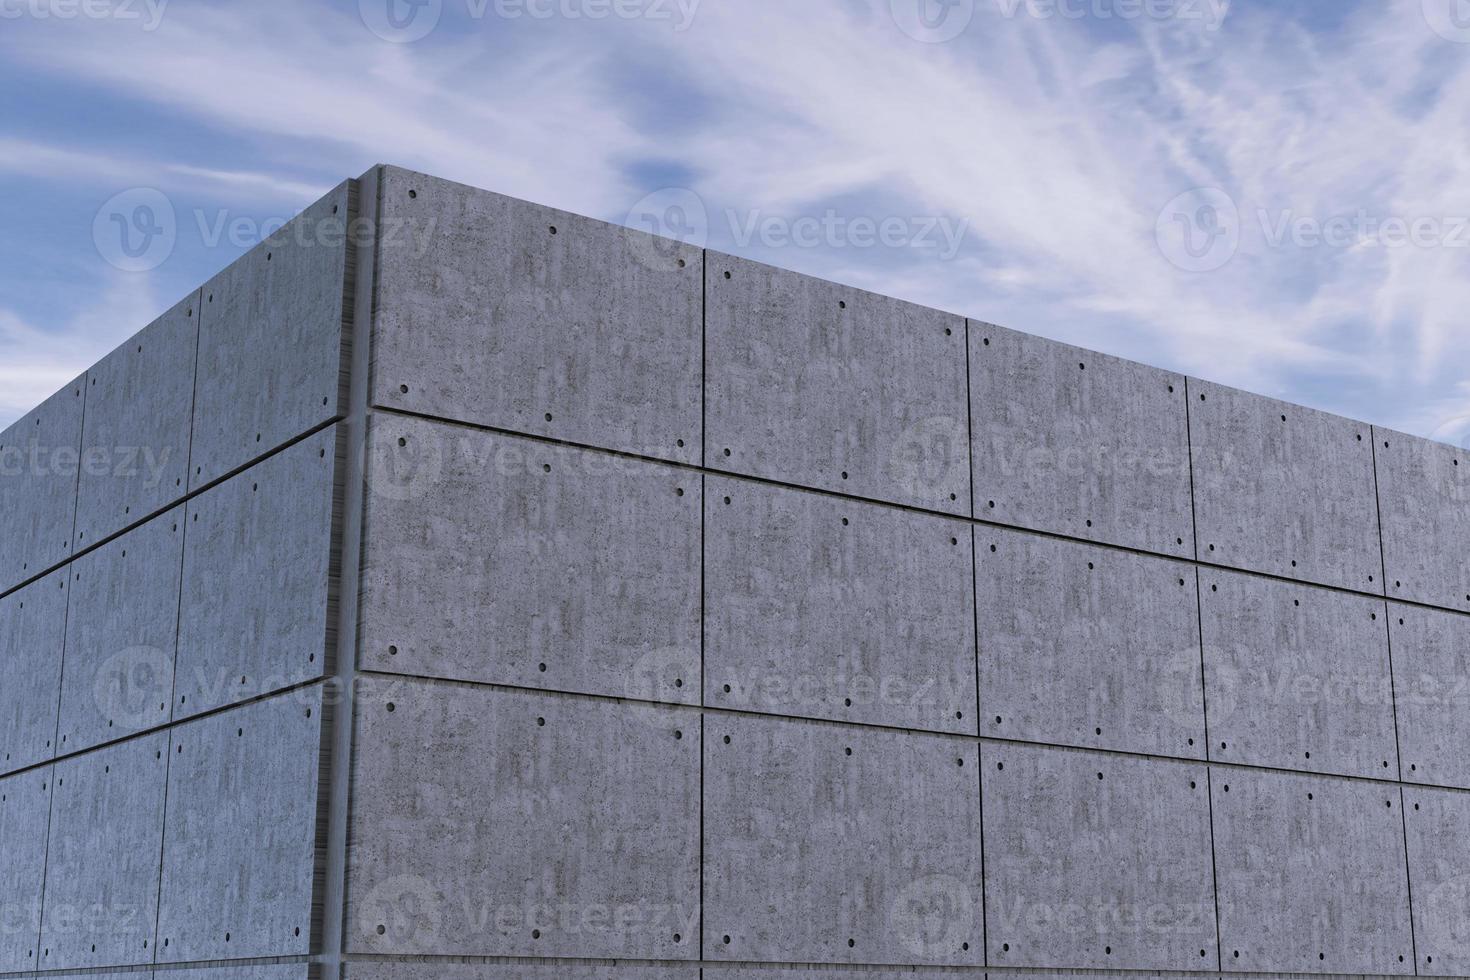 Minimasilm industrial concrete wall background photo